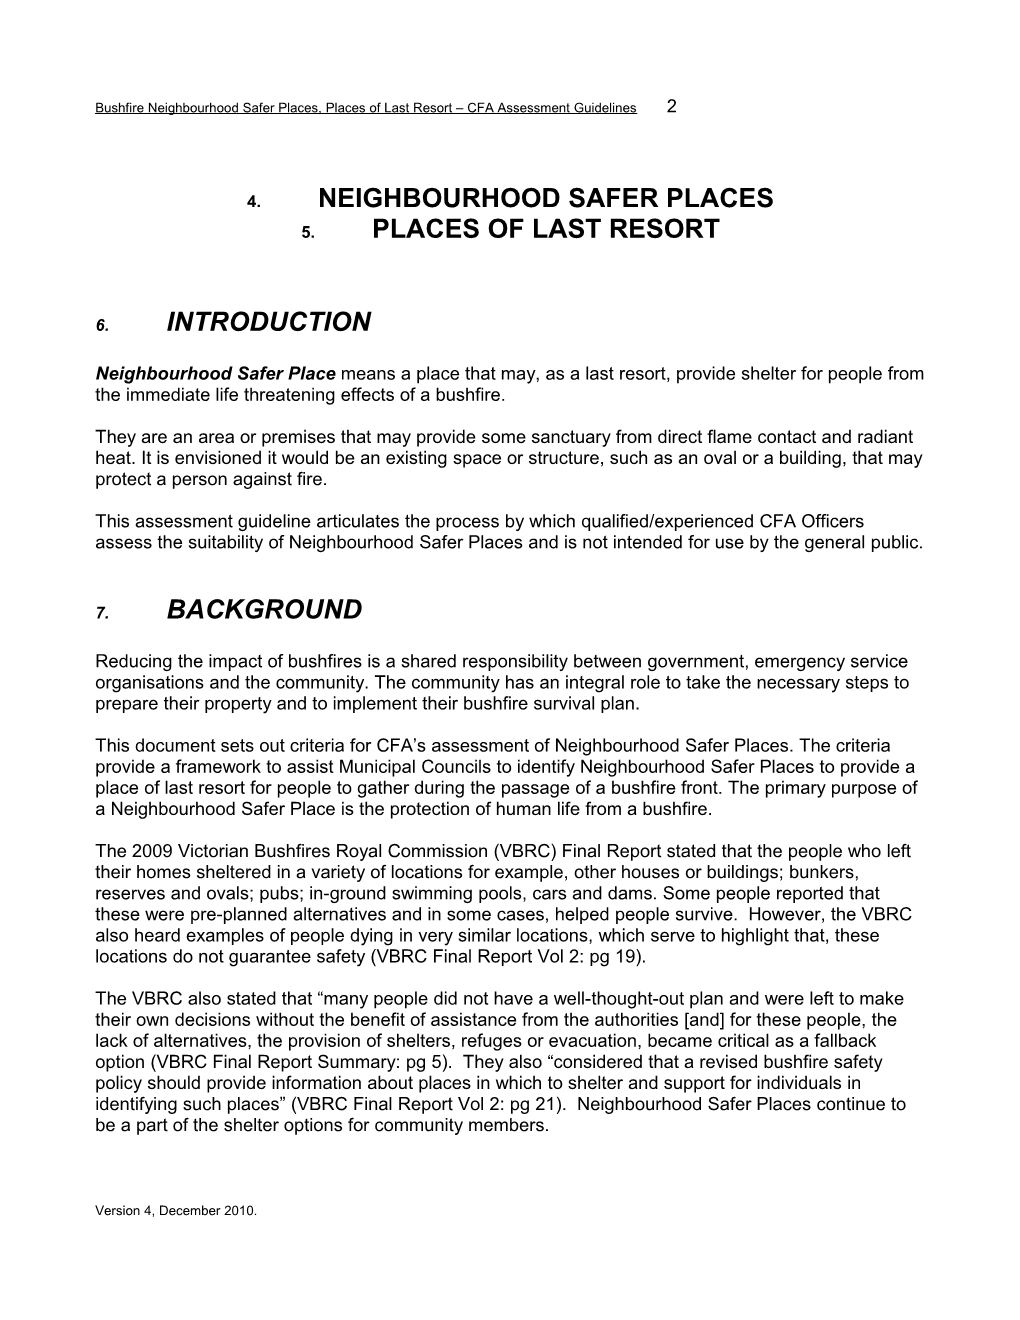 Bushfire Neighbourhood Safer Places - CFA Assessment Guidelines